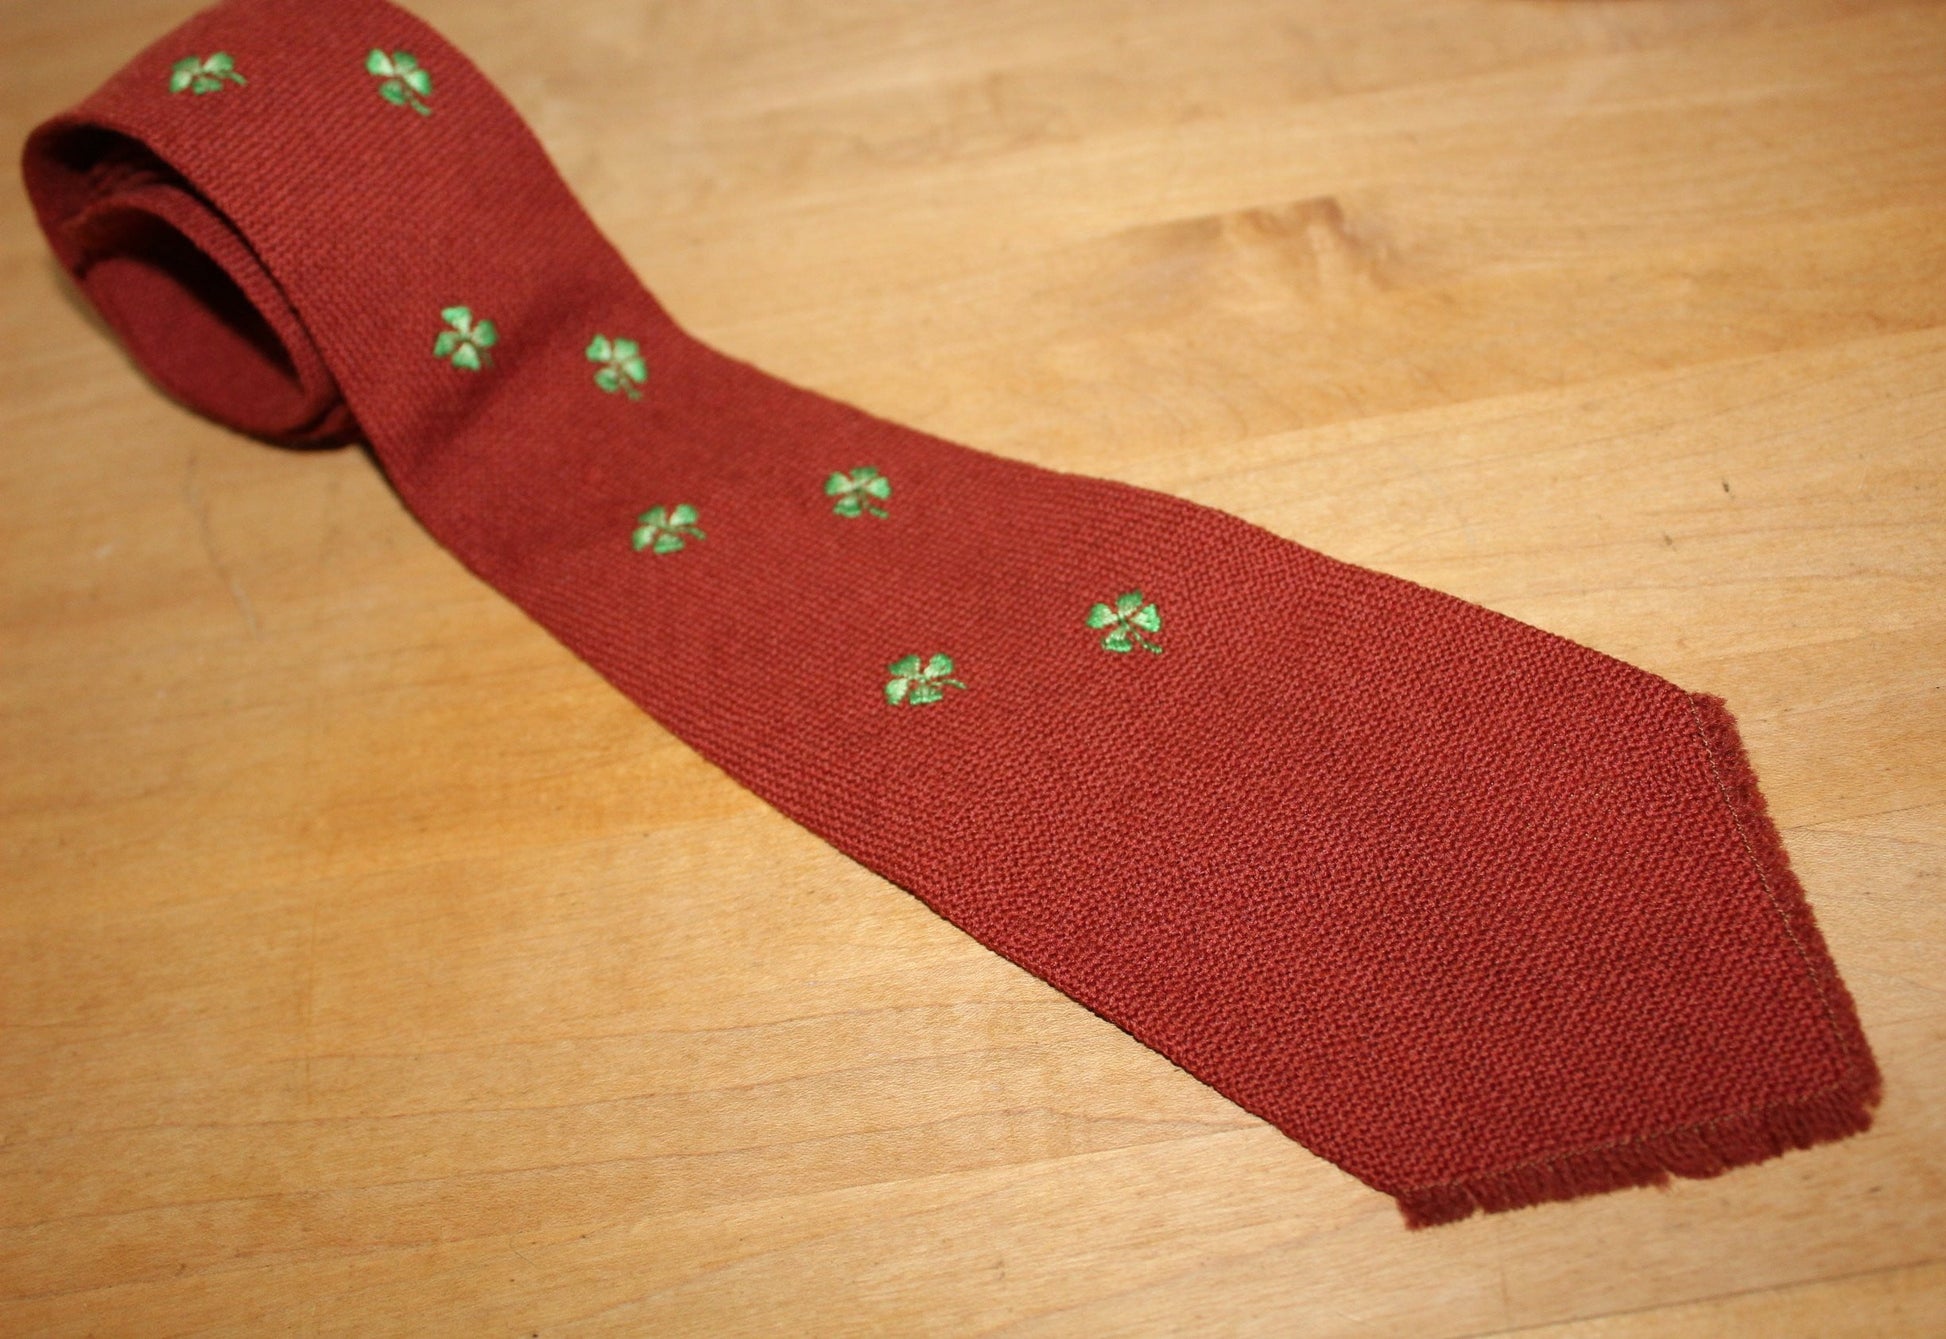 TEWA Embroidered Wool Necktie - Native American Hand Loomed - Santa Fe Mkt 4 leaf clovers